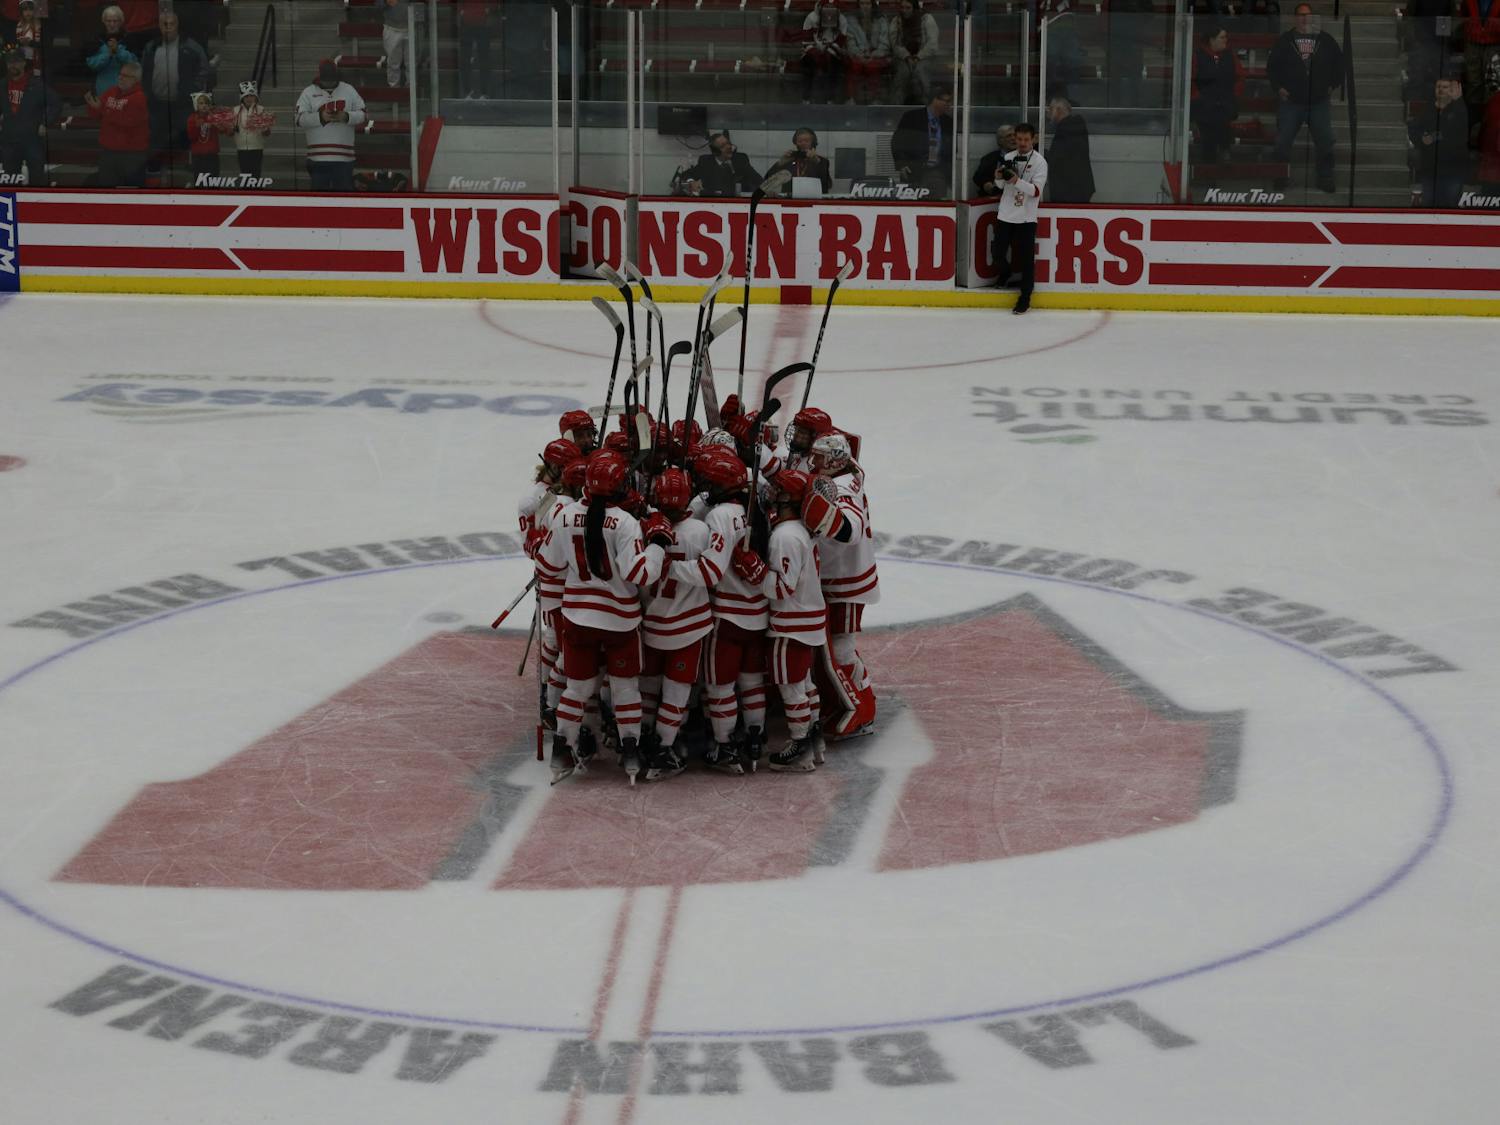 PHOTOS: No. 6 Duluth defeats No. 2 Wisconsin Women's Hockey 3-2